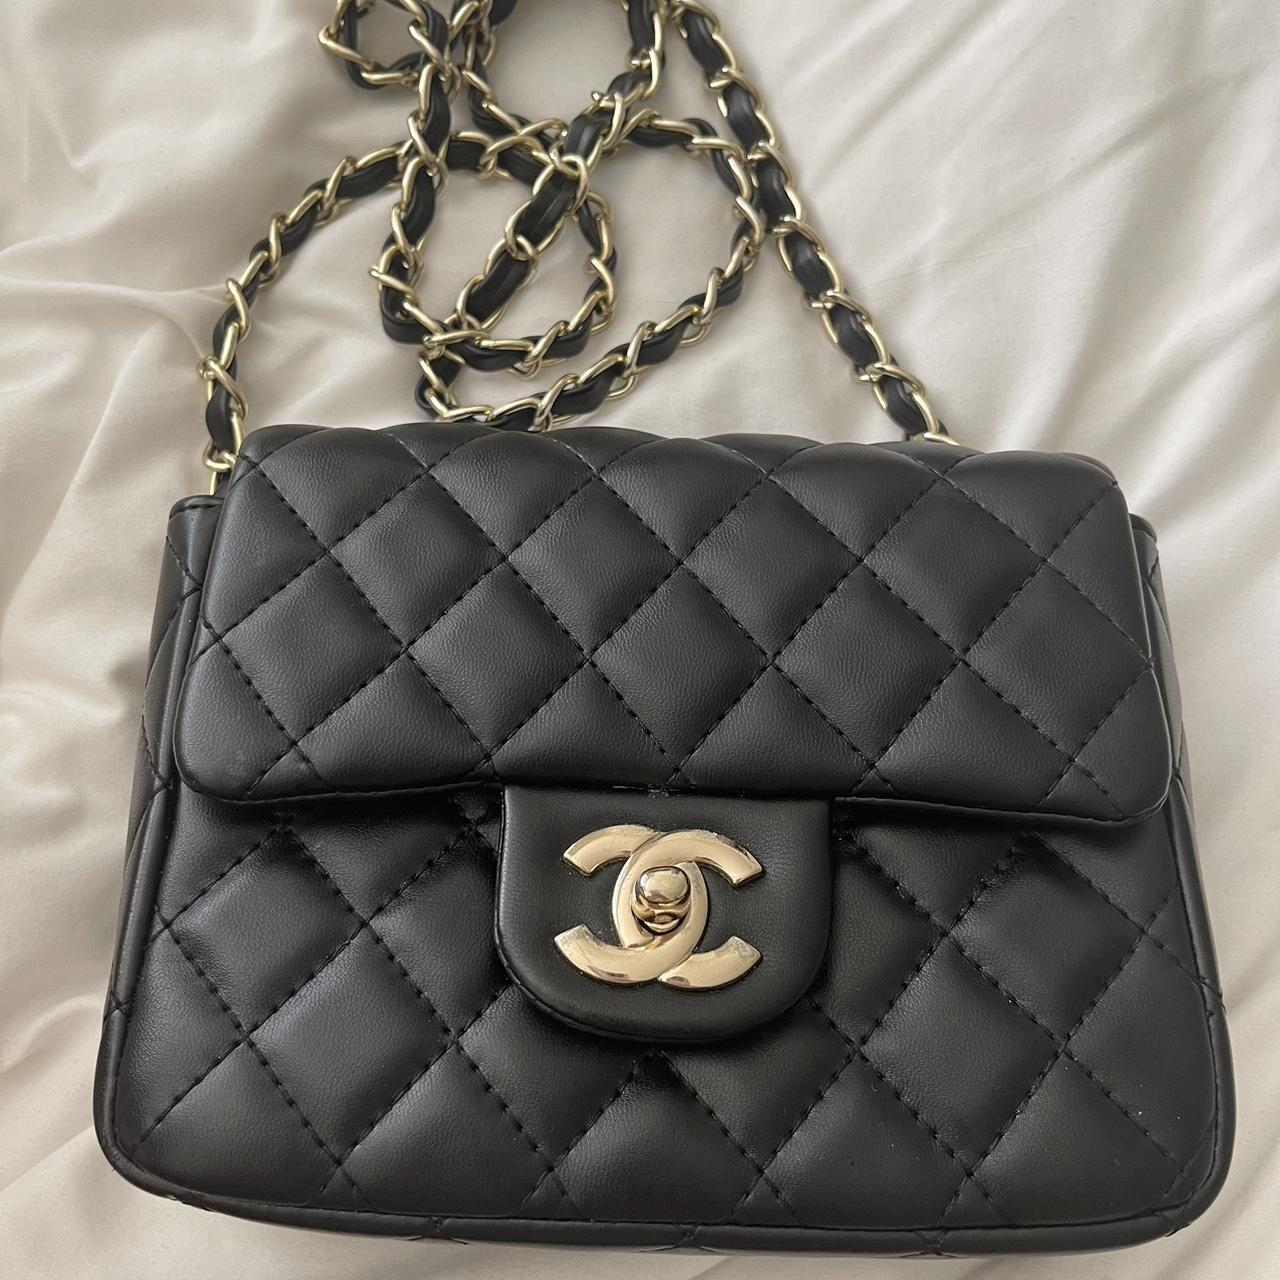 Chanel bags - Depop